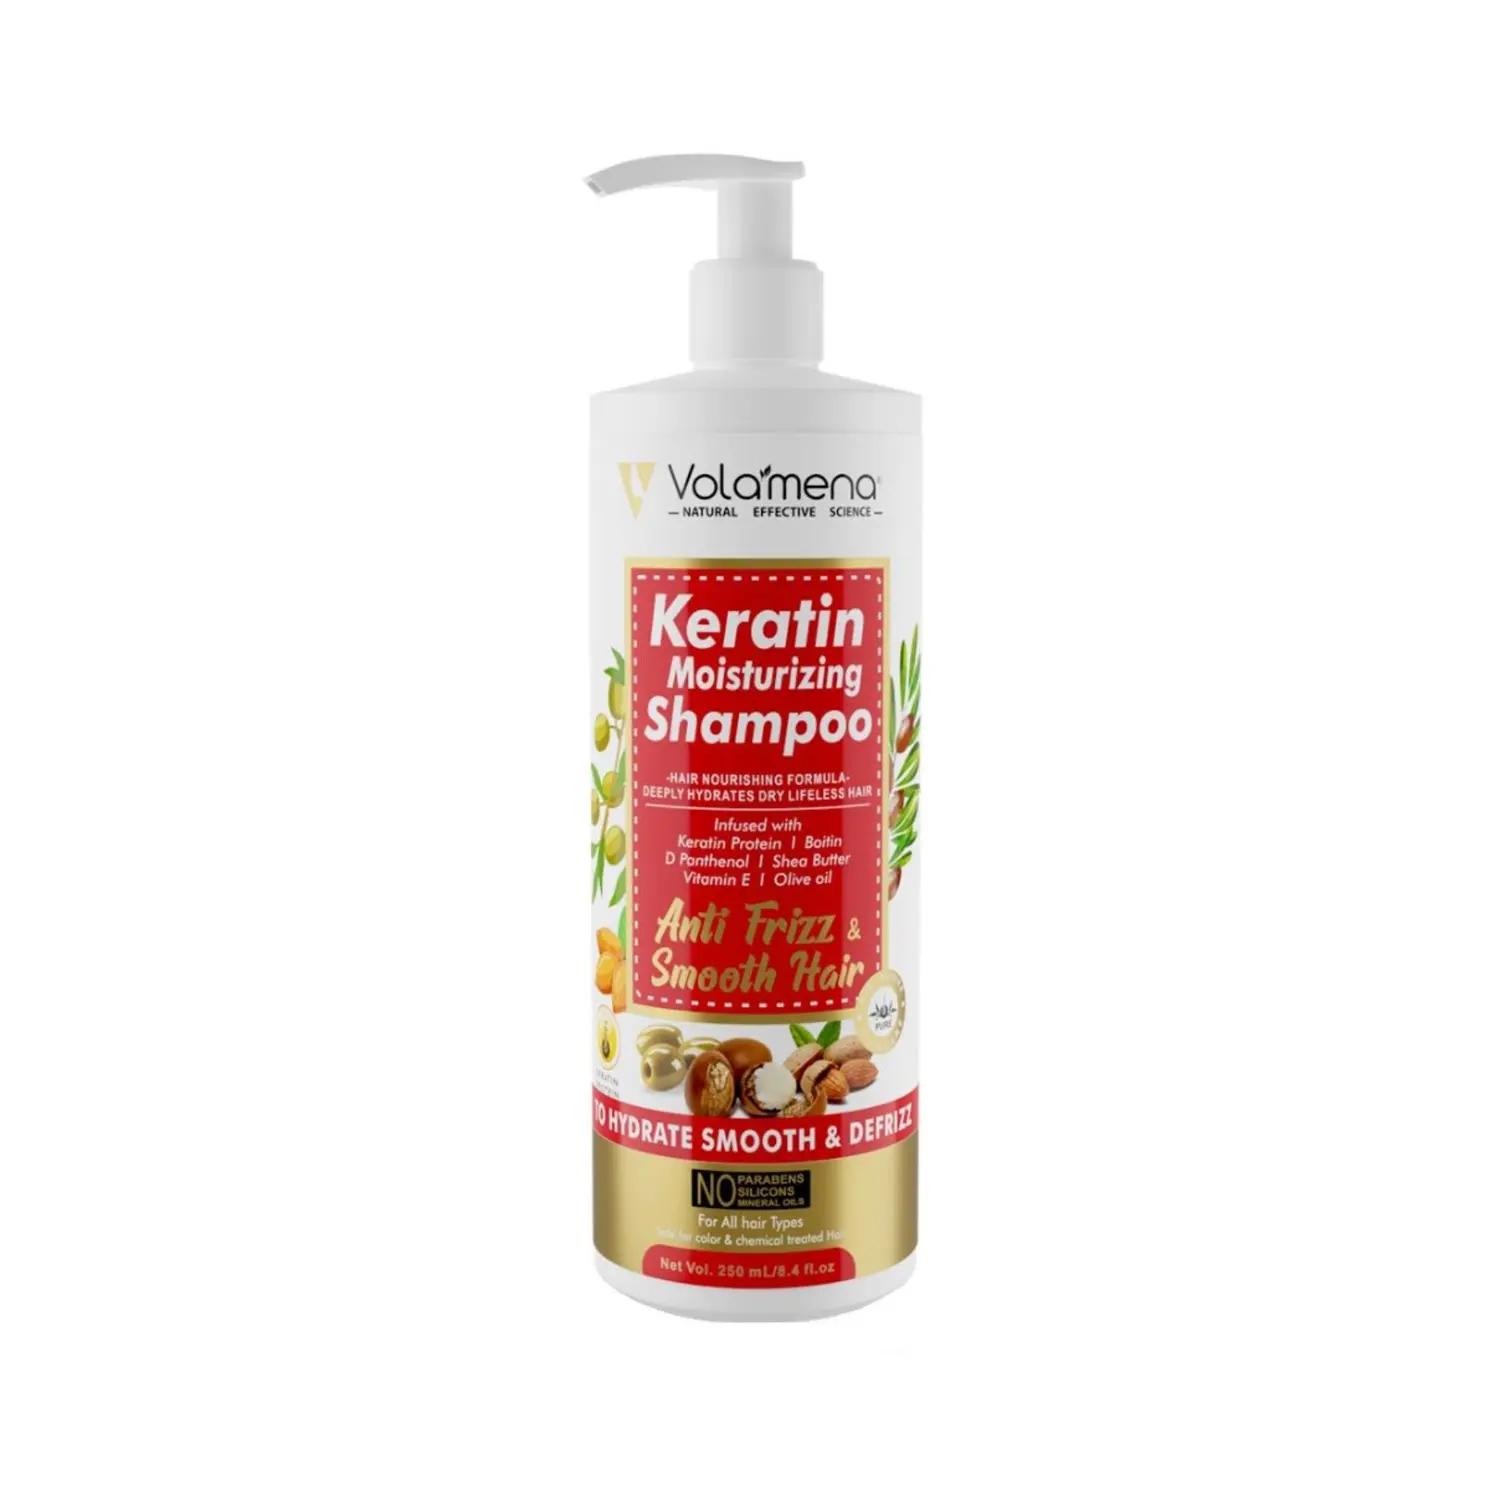 volamena keratin moisturizing shampoo (250ml)